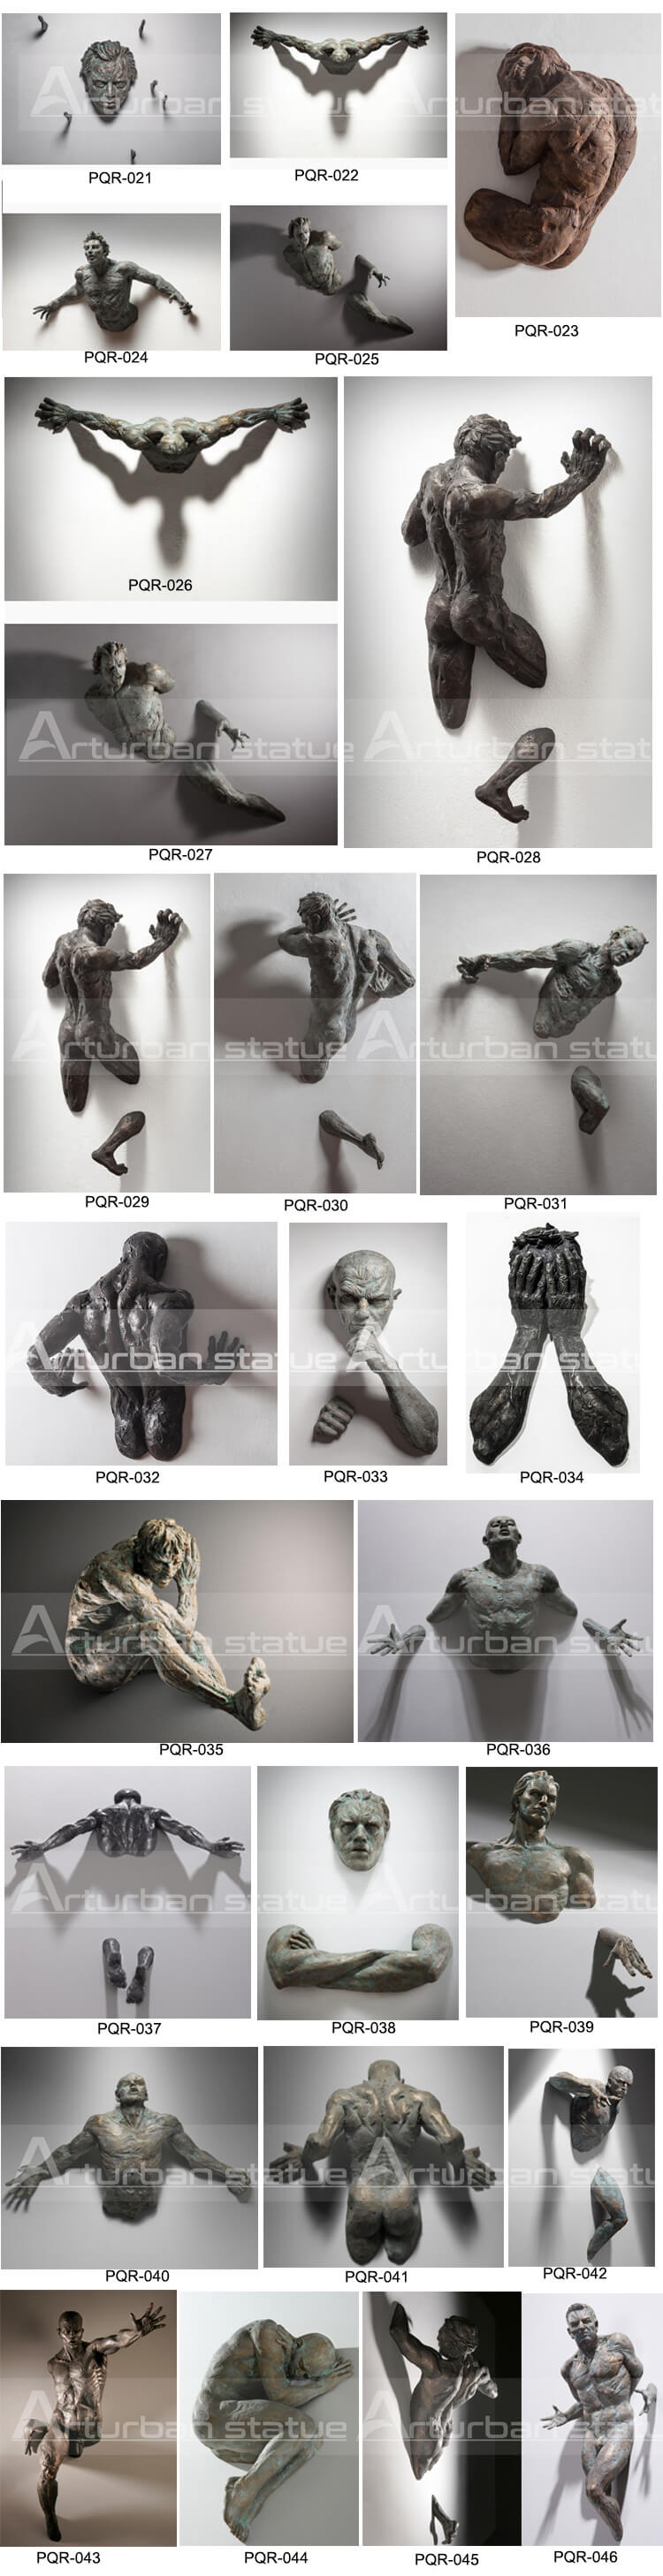 Serial Matteo Pugliese Sculpture